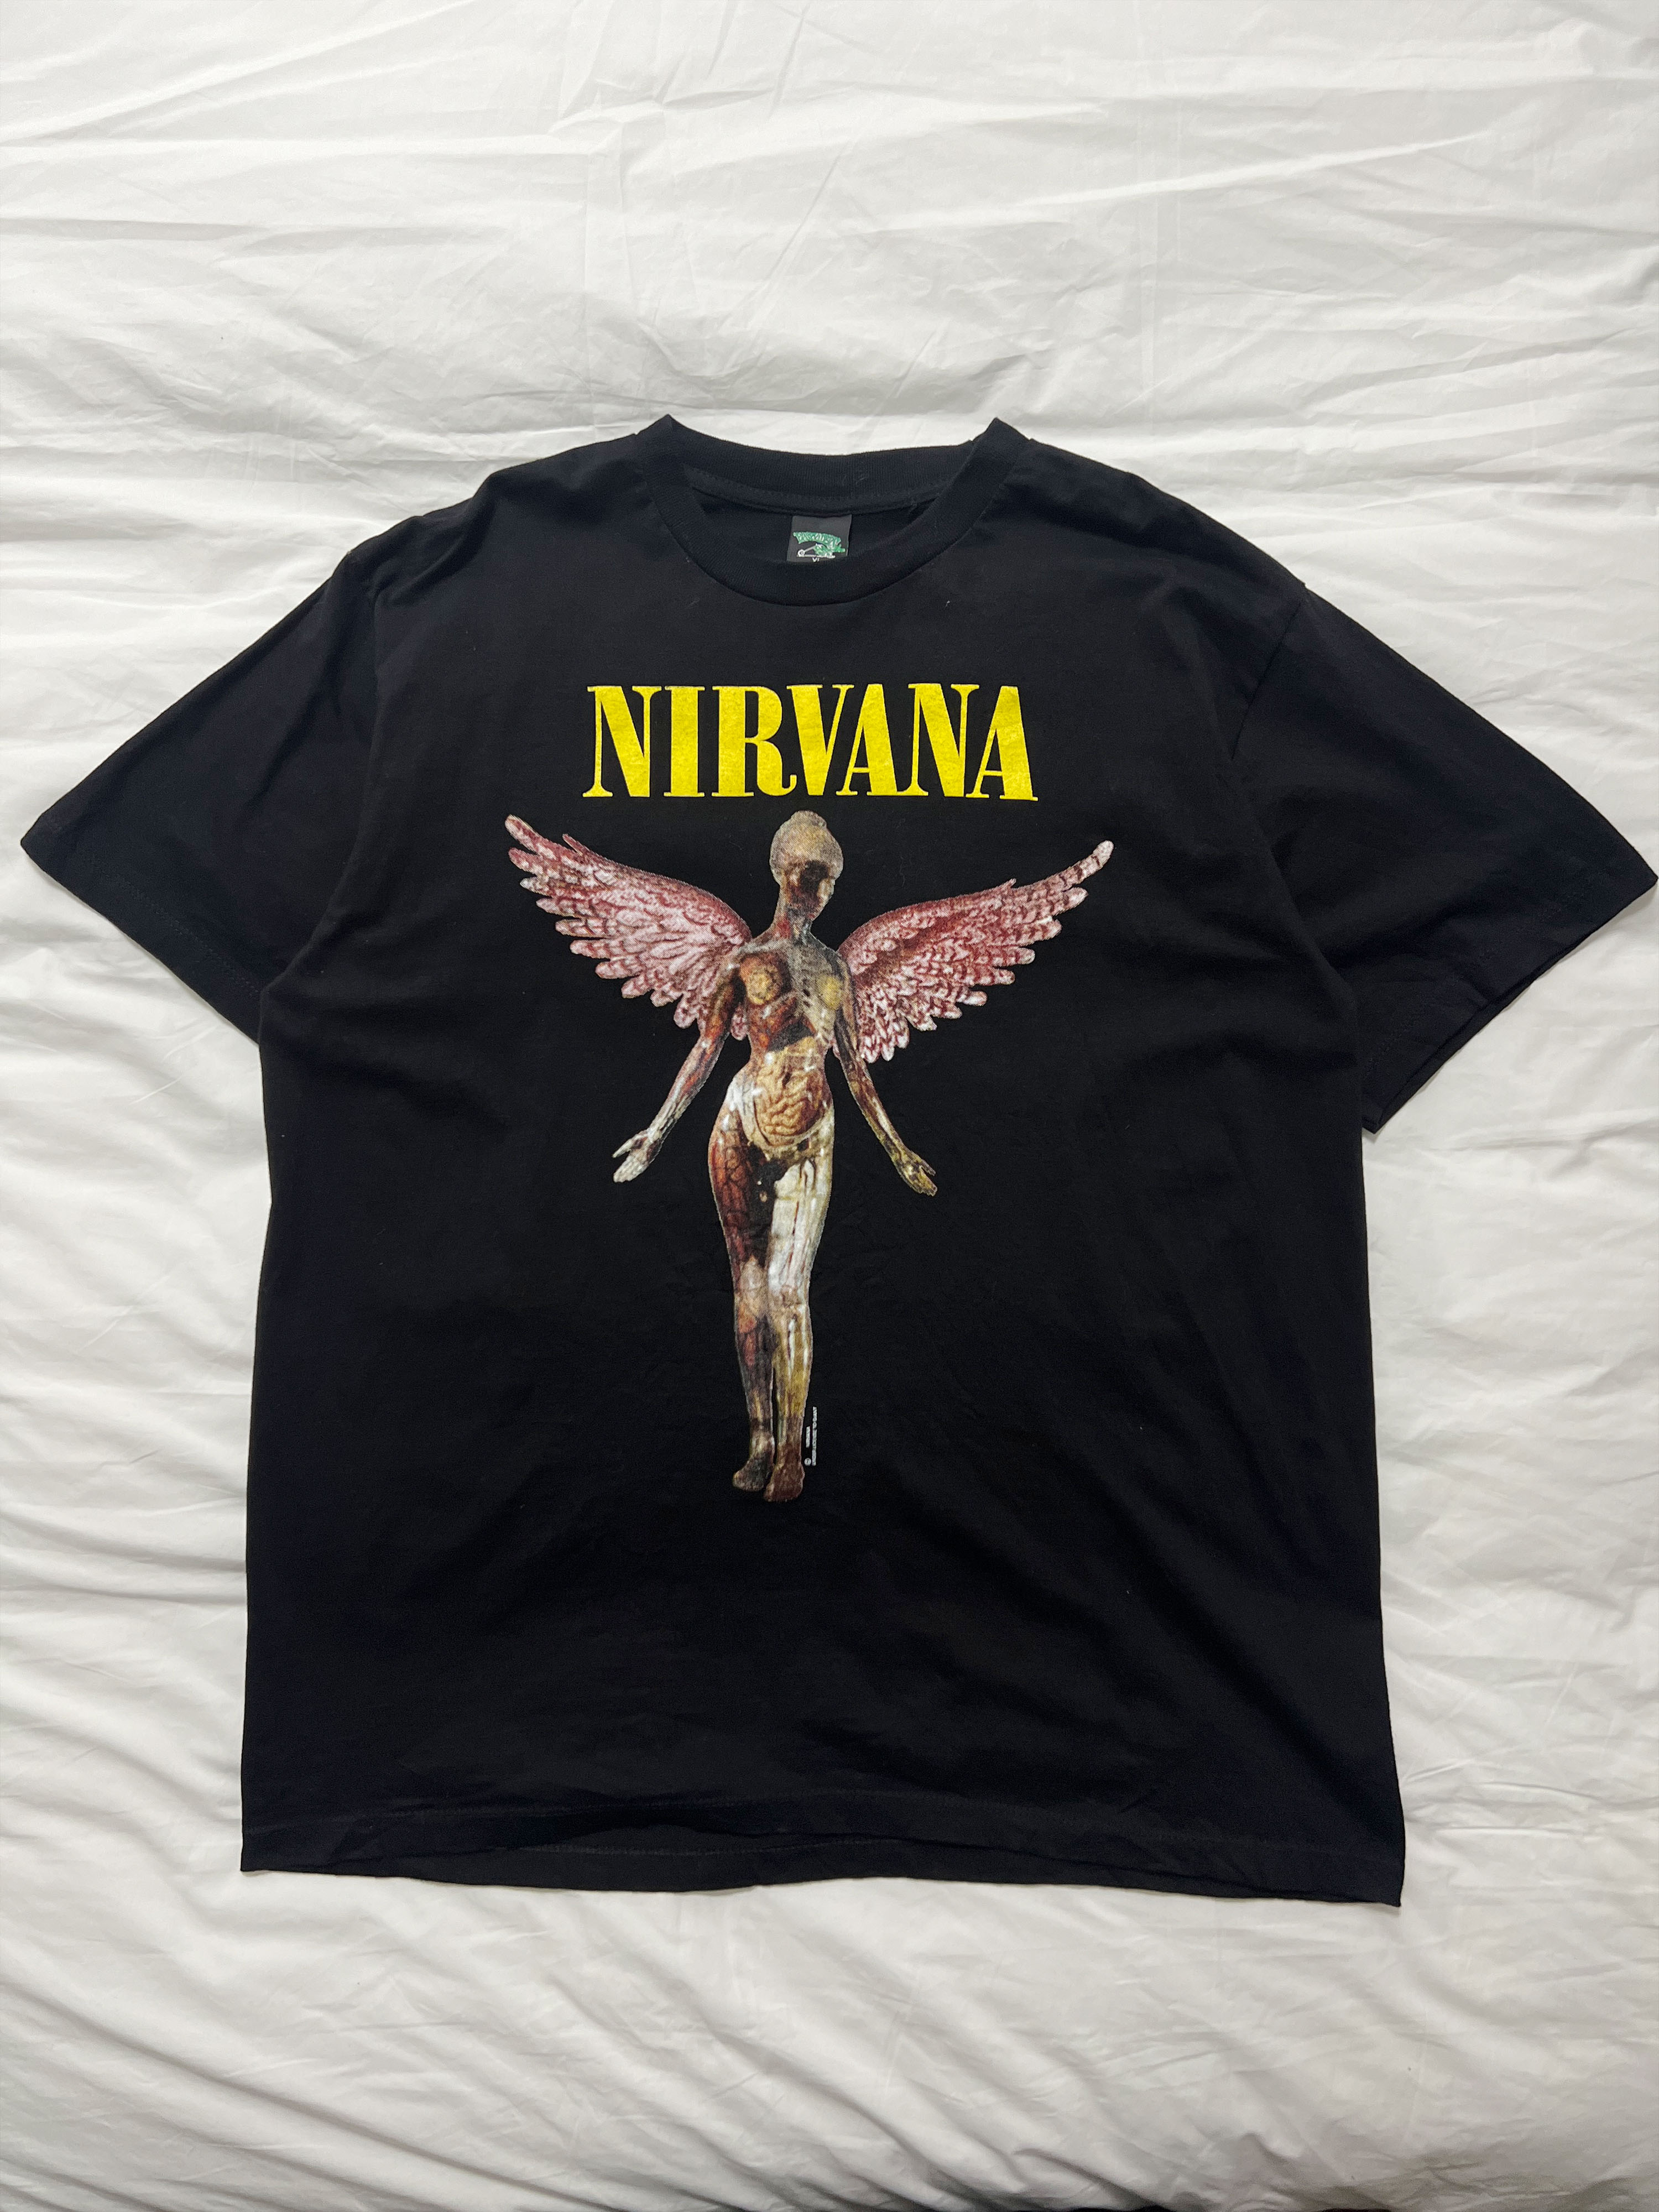 NIRVANA IN UTERO bootleg t-shirts